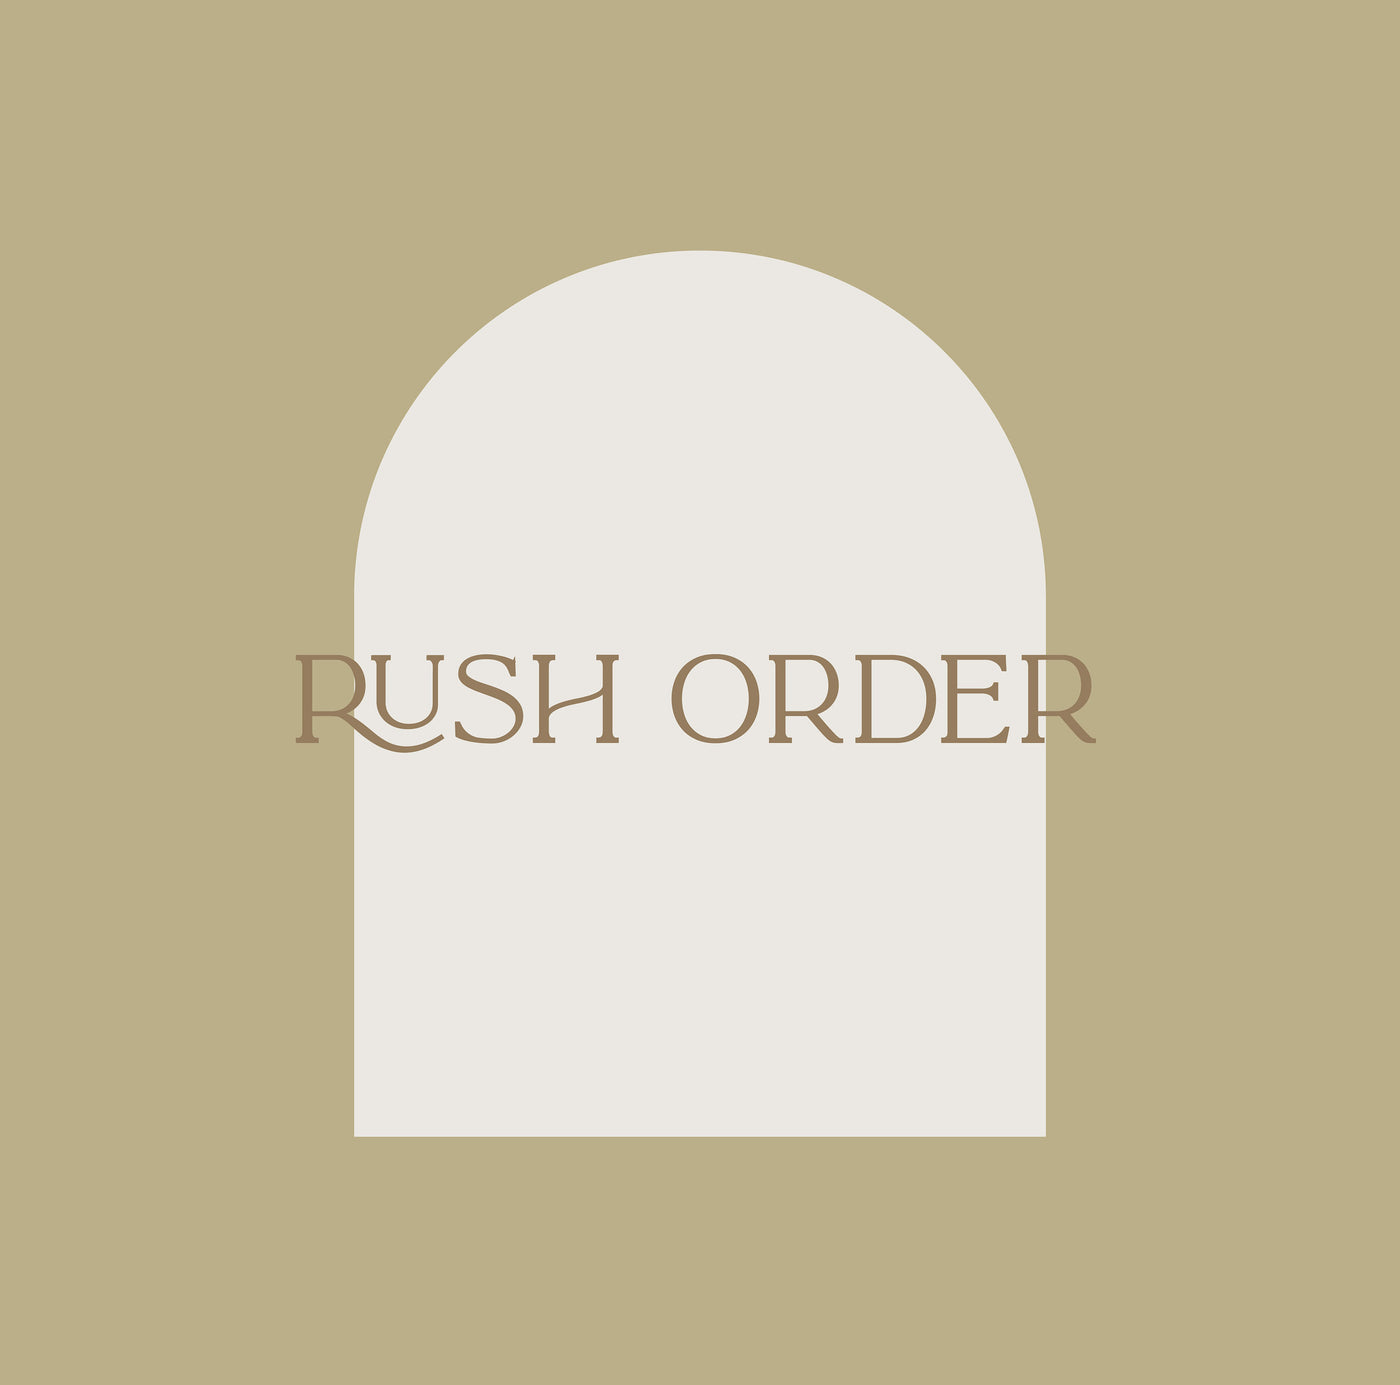 Rush Order Processing - Rush My Order